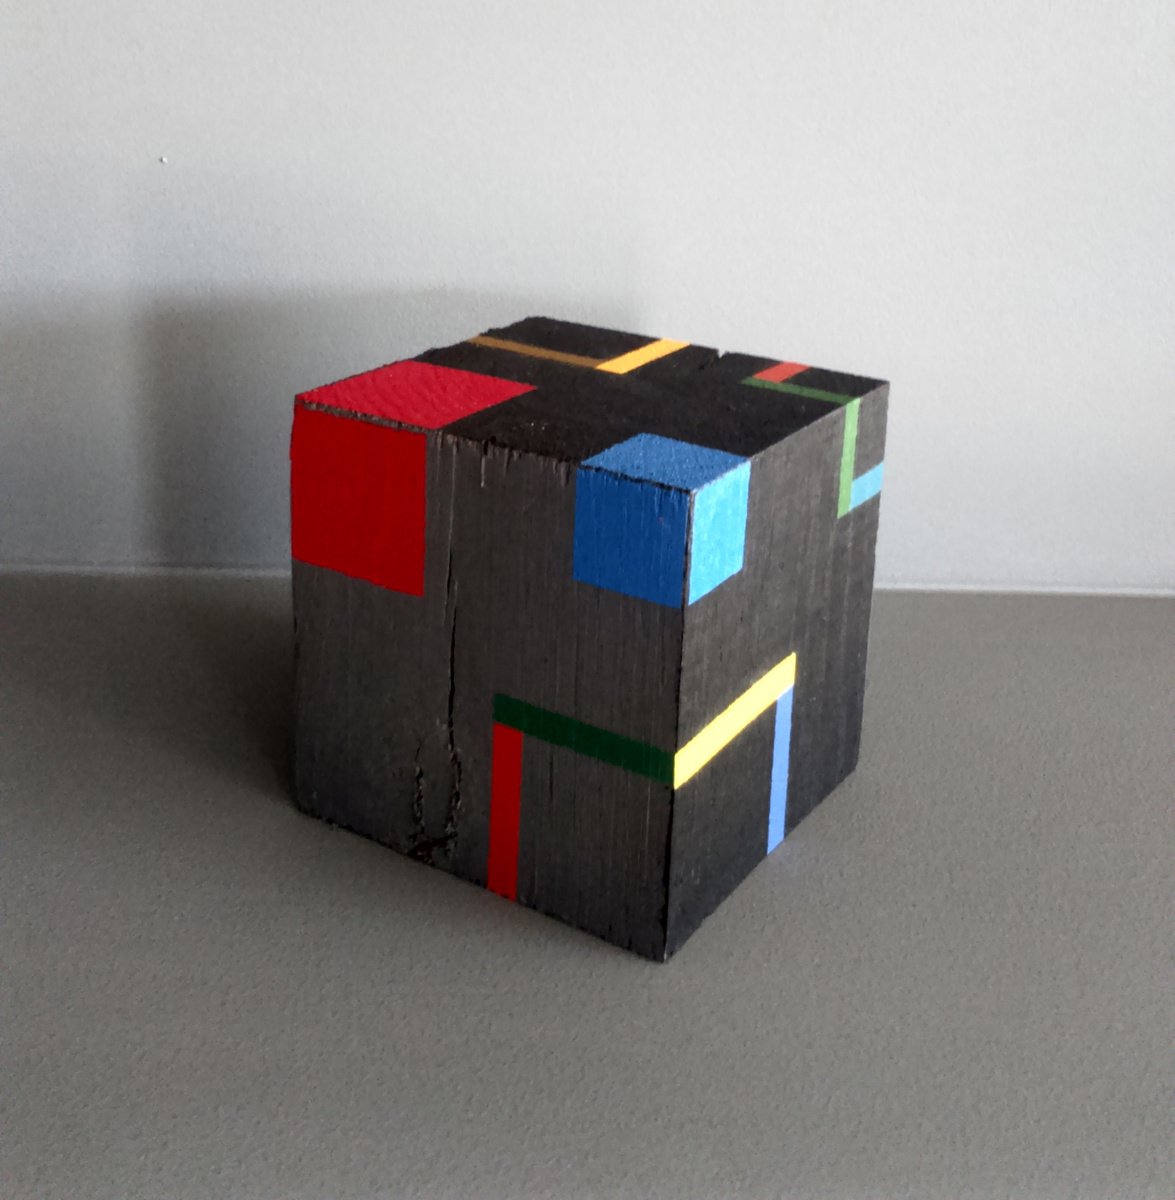 Cube a by Luis Medina